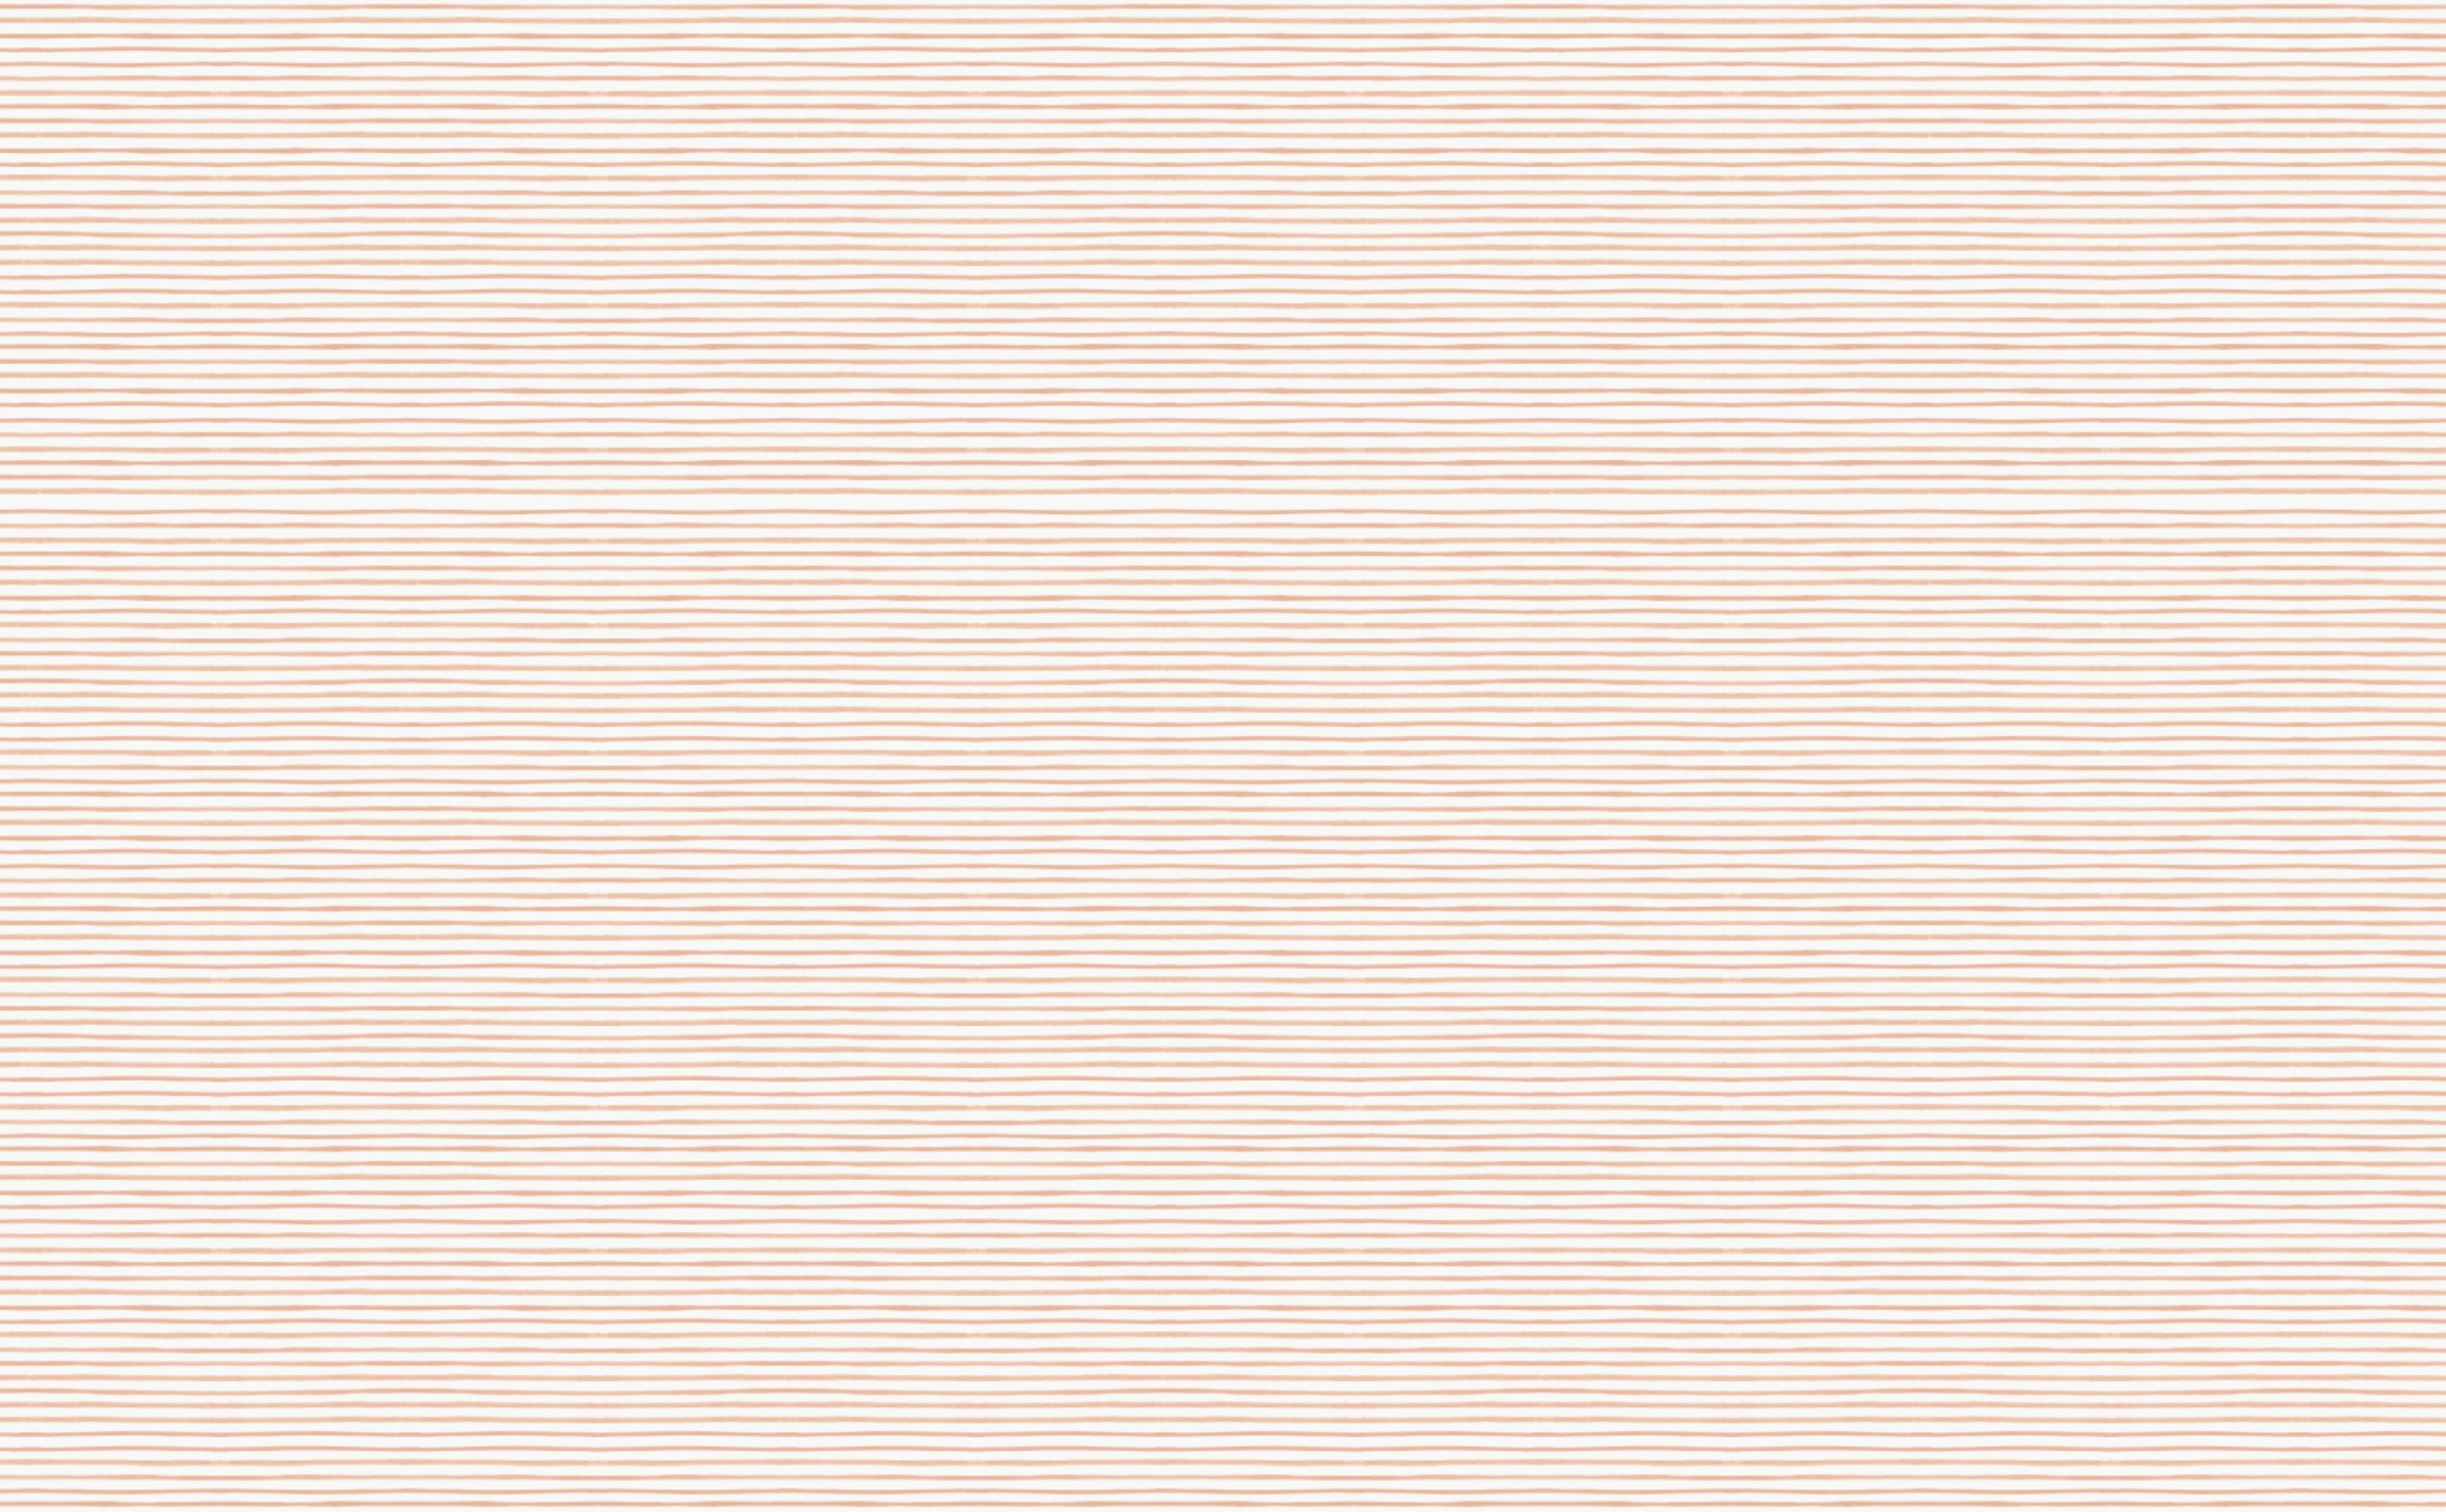 Horizontal Pinstripes Wallpaper for Walls